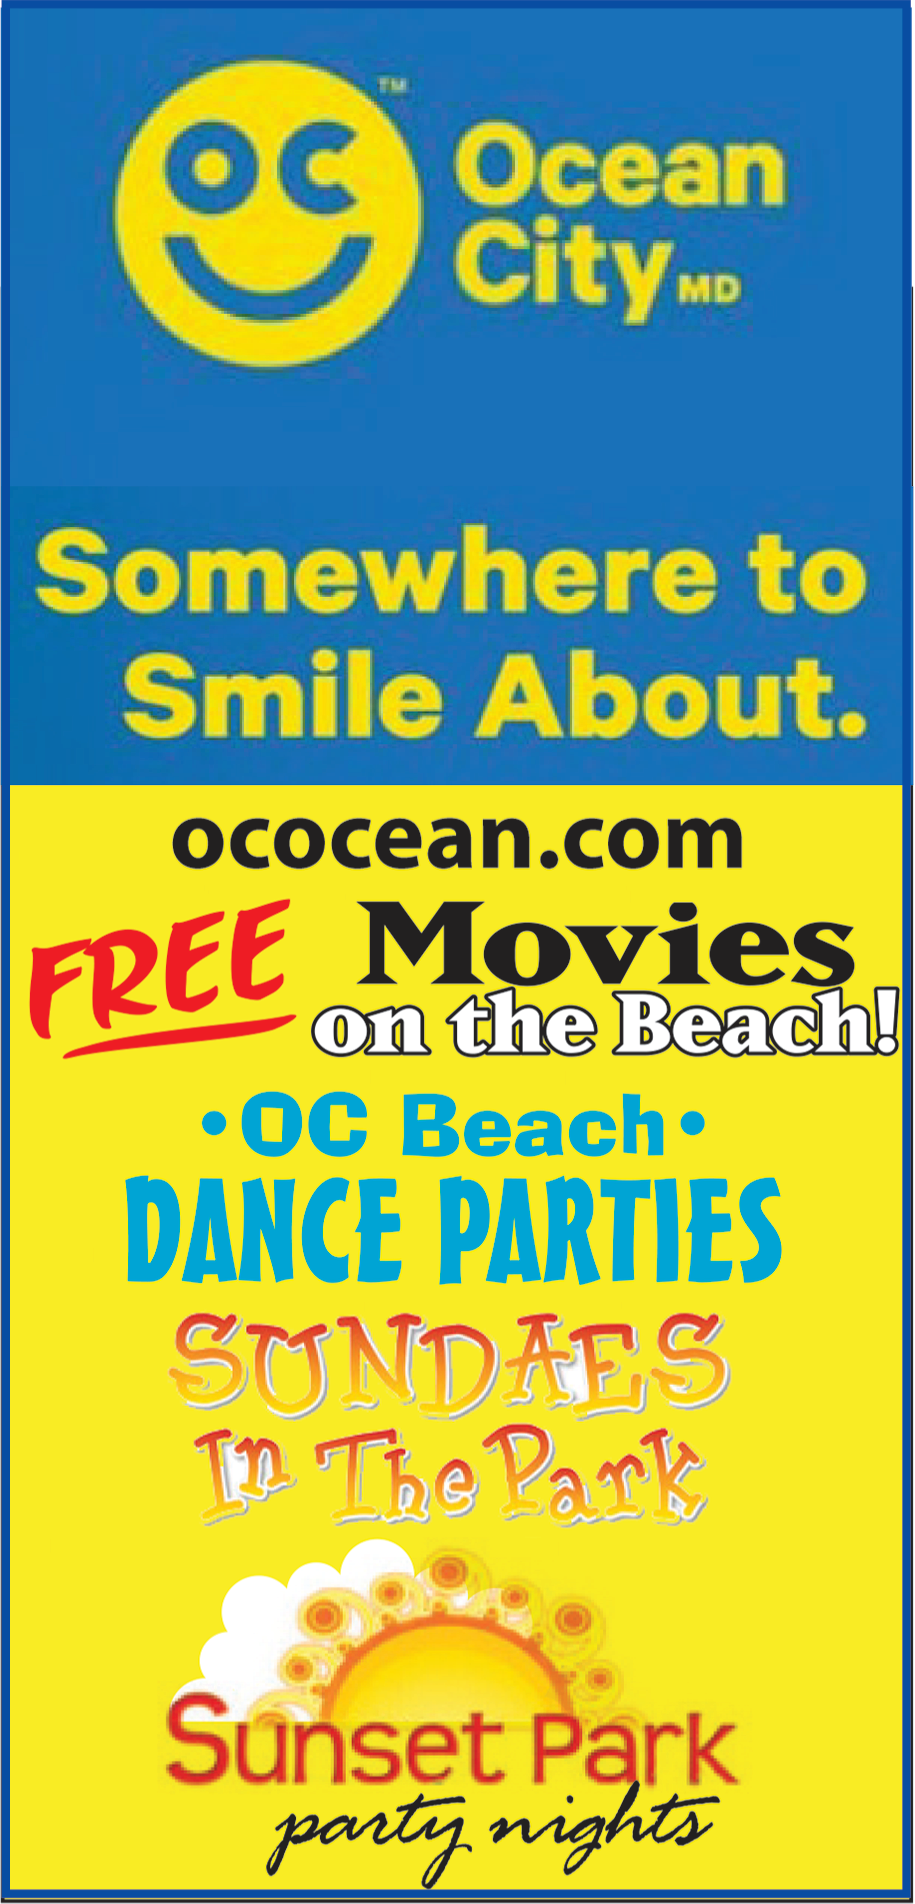 OCEAN CITY FUN FAMILY FREE EVENTS Print Ad